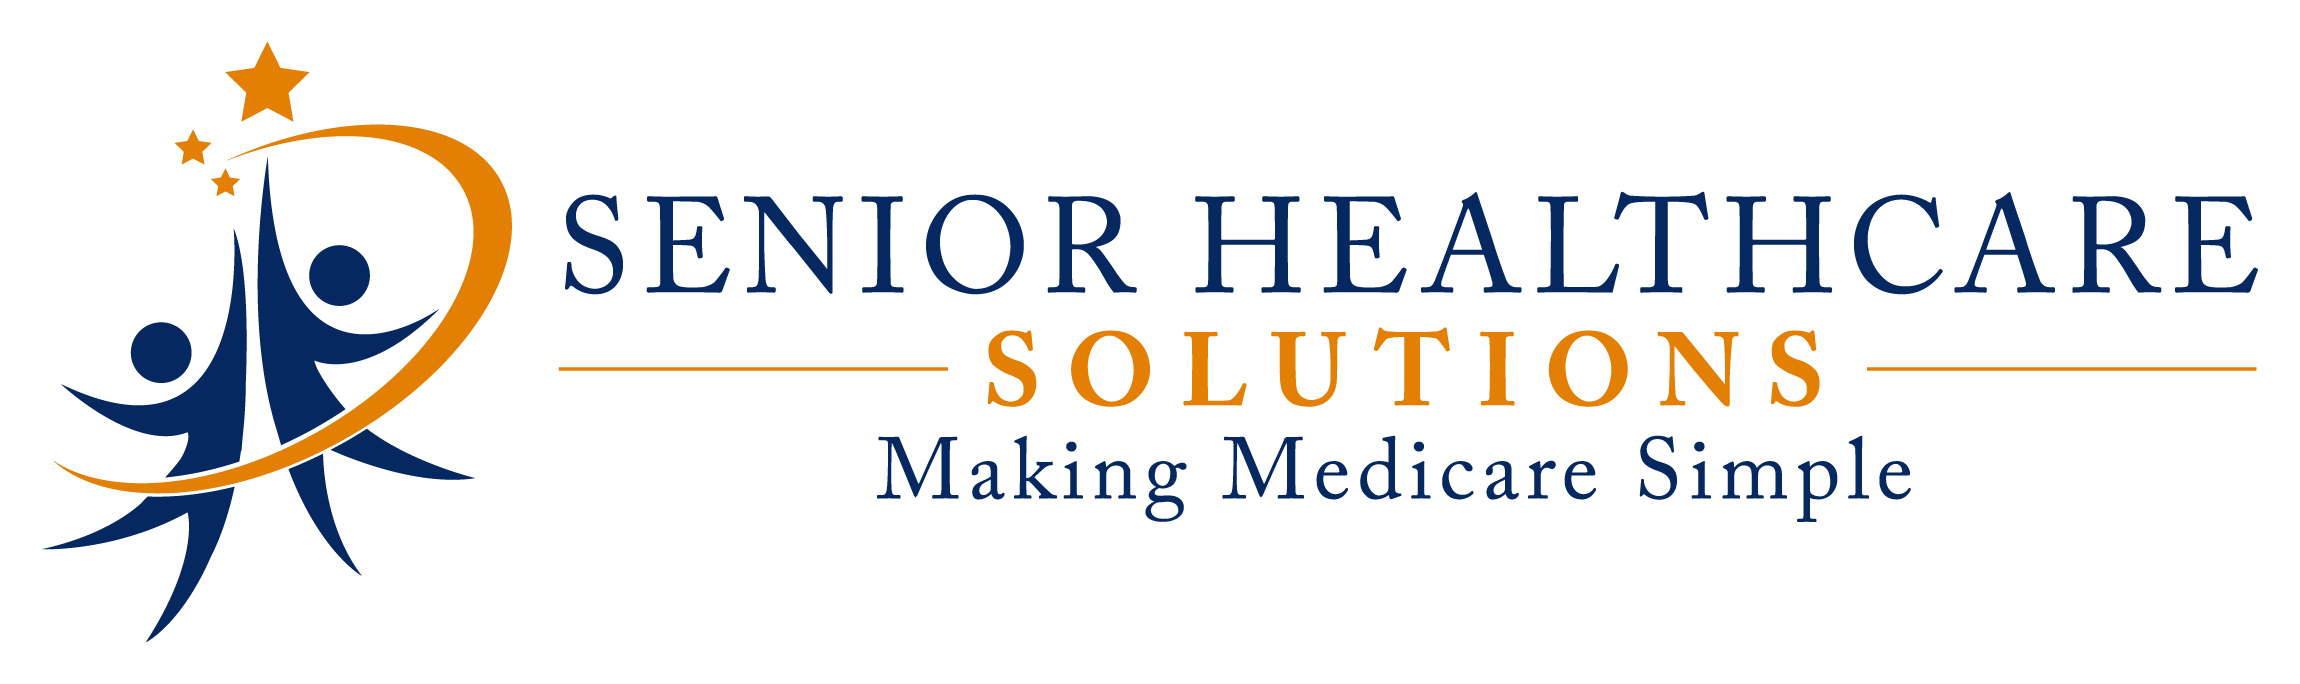 Senior Healthcare Solutions